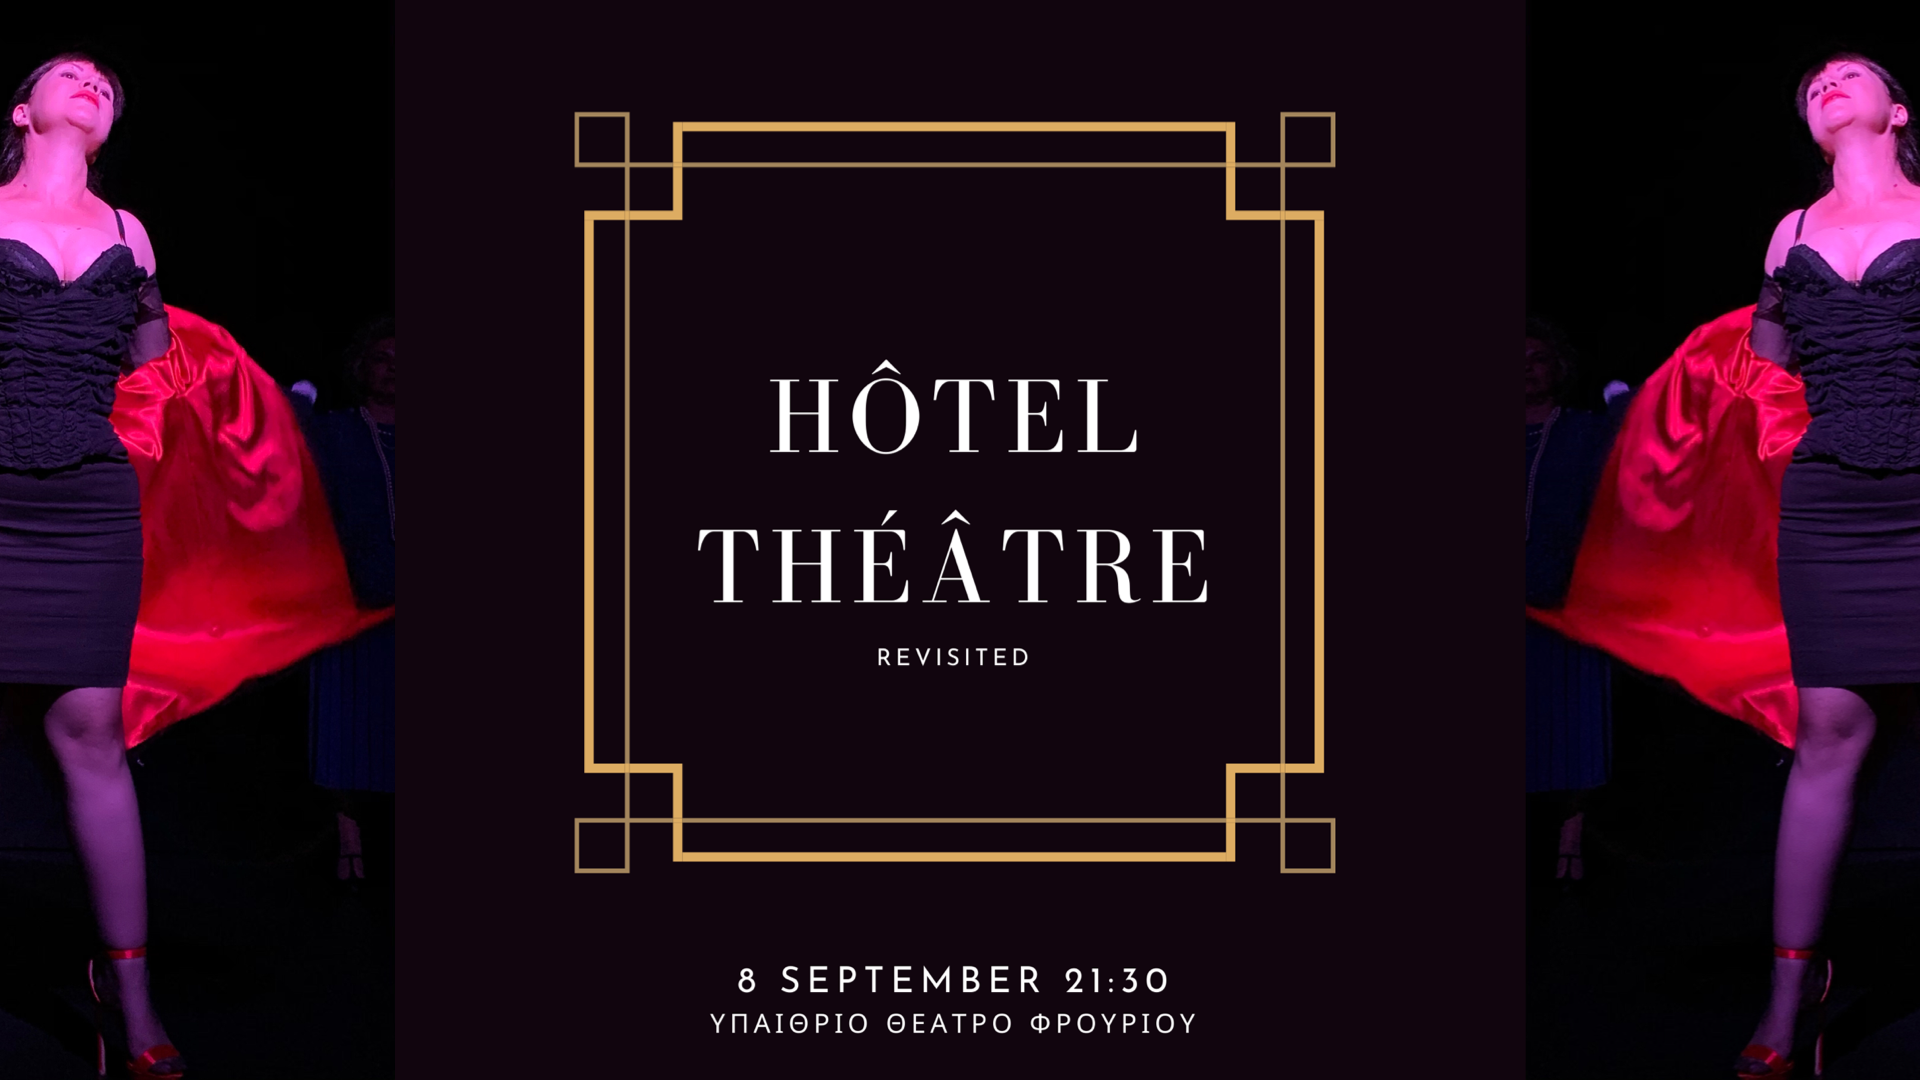 “Hôtel Théâtre REVISITED”: Η επιτυχηµένη παράσταση του καλοκαιριού επιστρέφει!